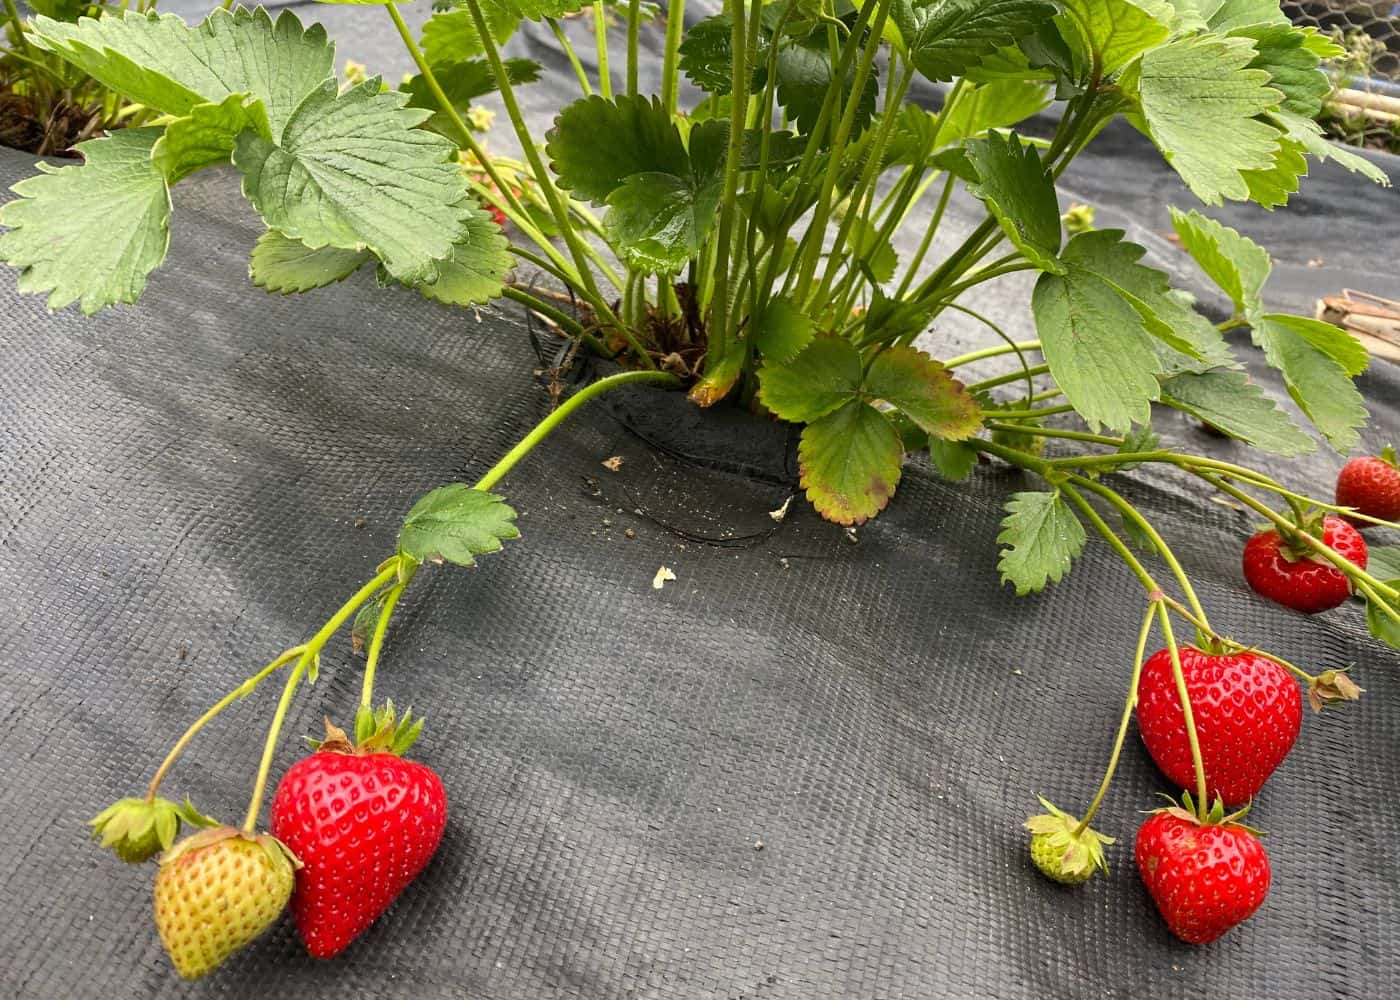 Everbearing strawberries